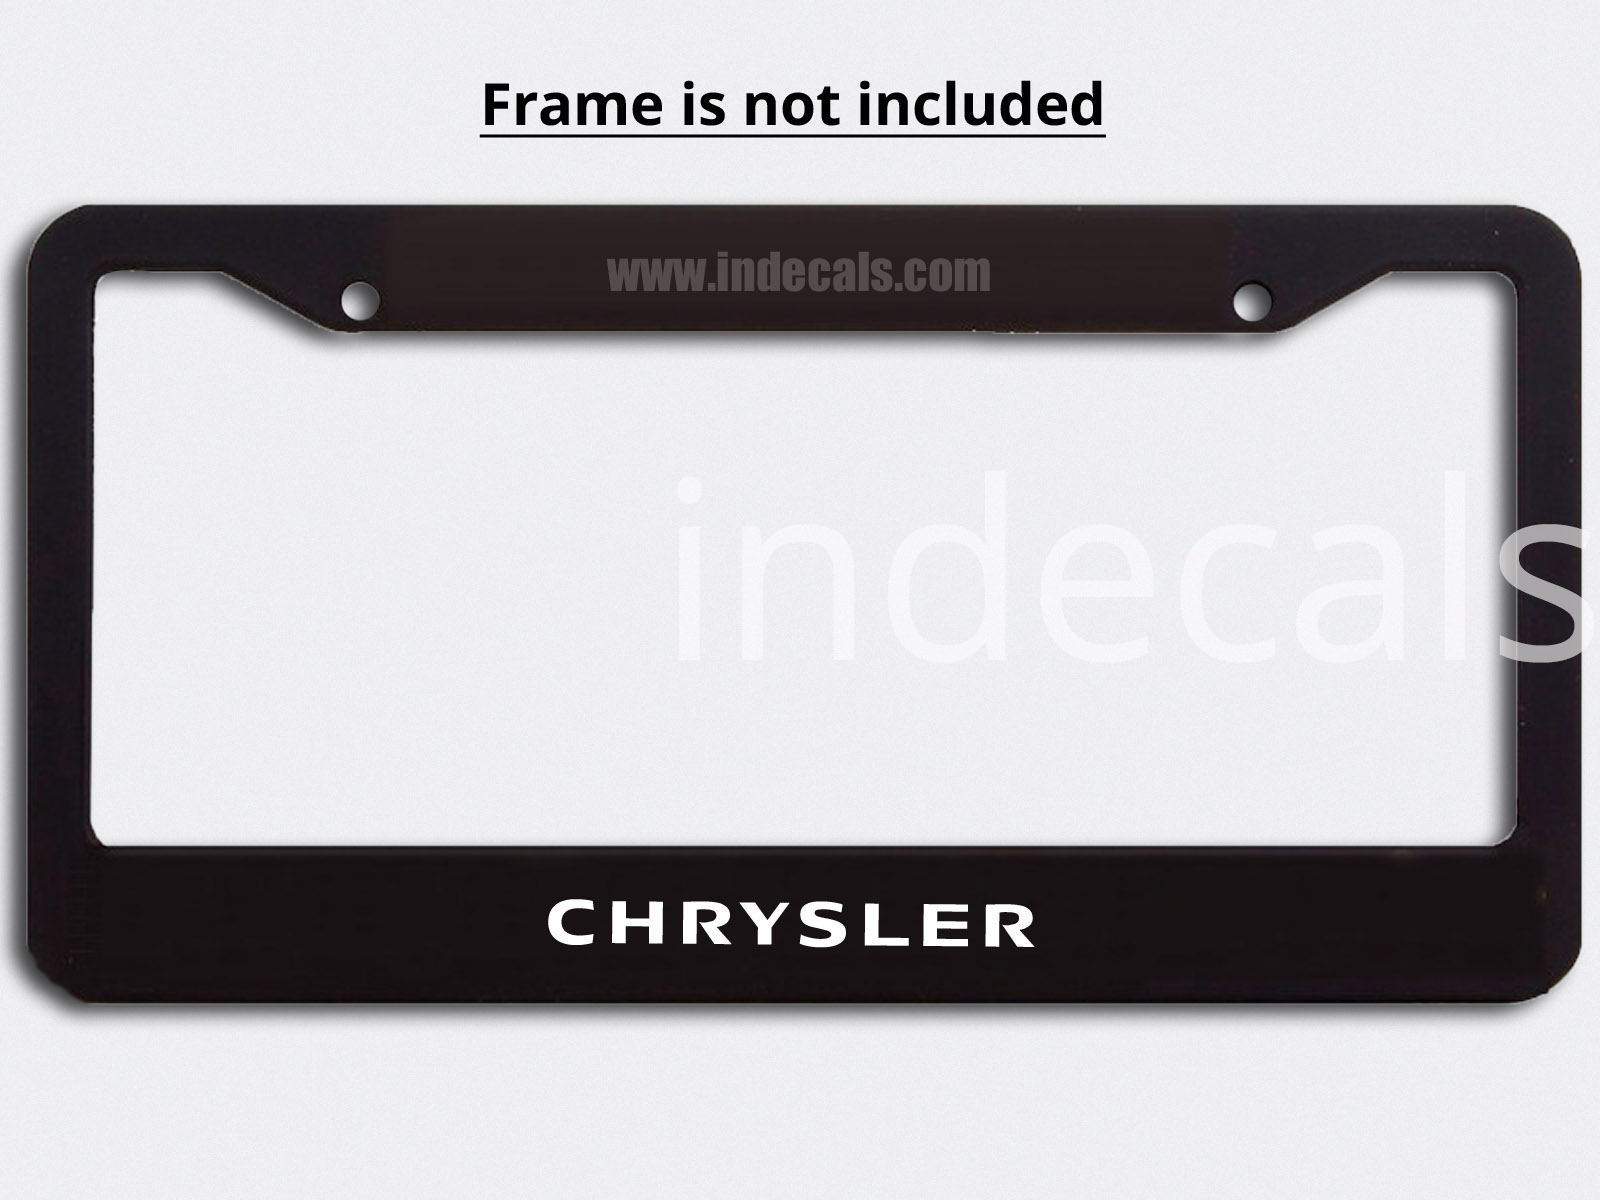 3 x Chrysler Stickers for Plate Frame - White